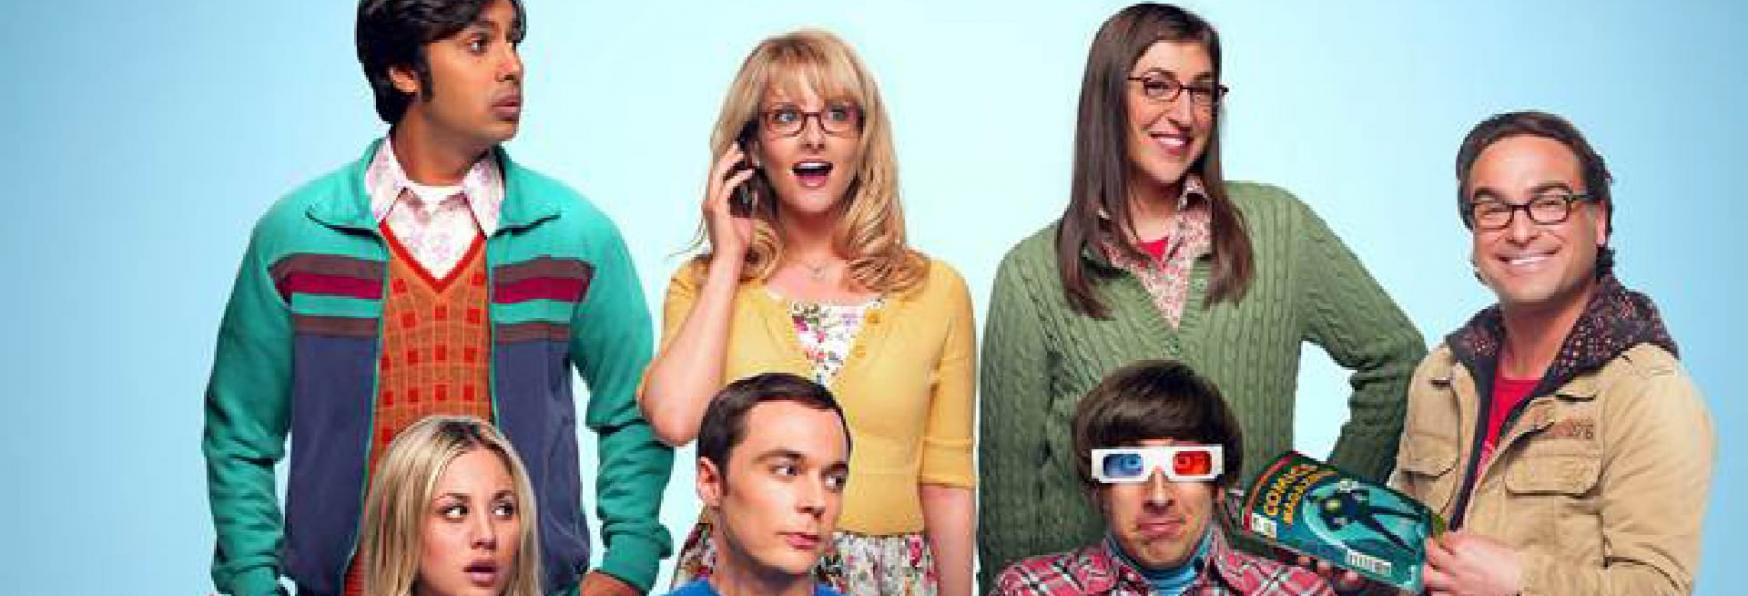 The Big Bang Theory: in arrivo uno nuovo Spin-off della Serie TV?